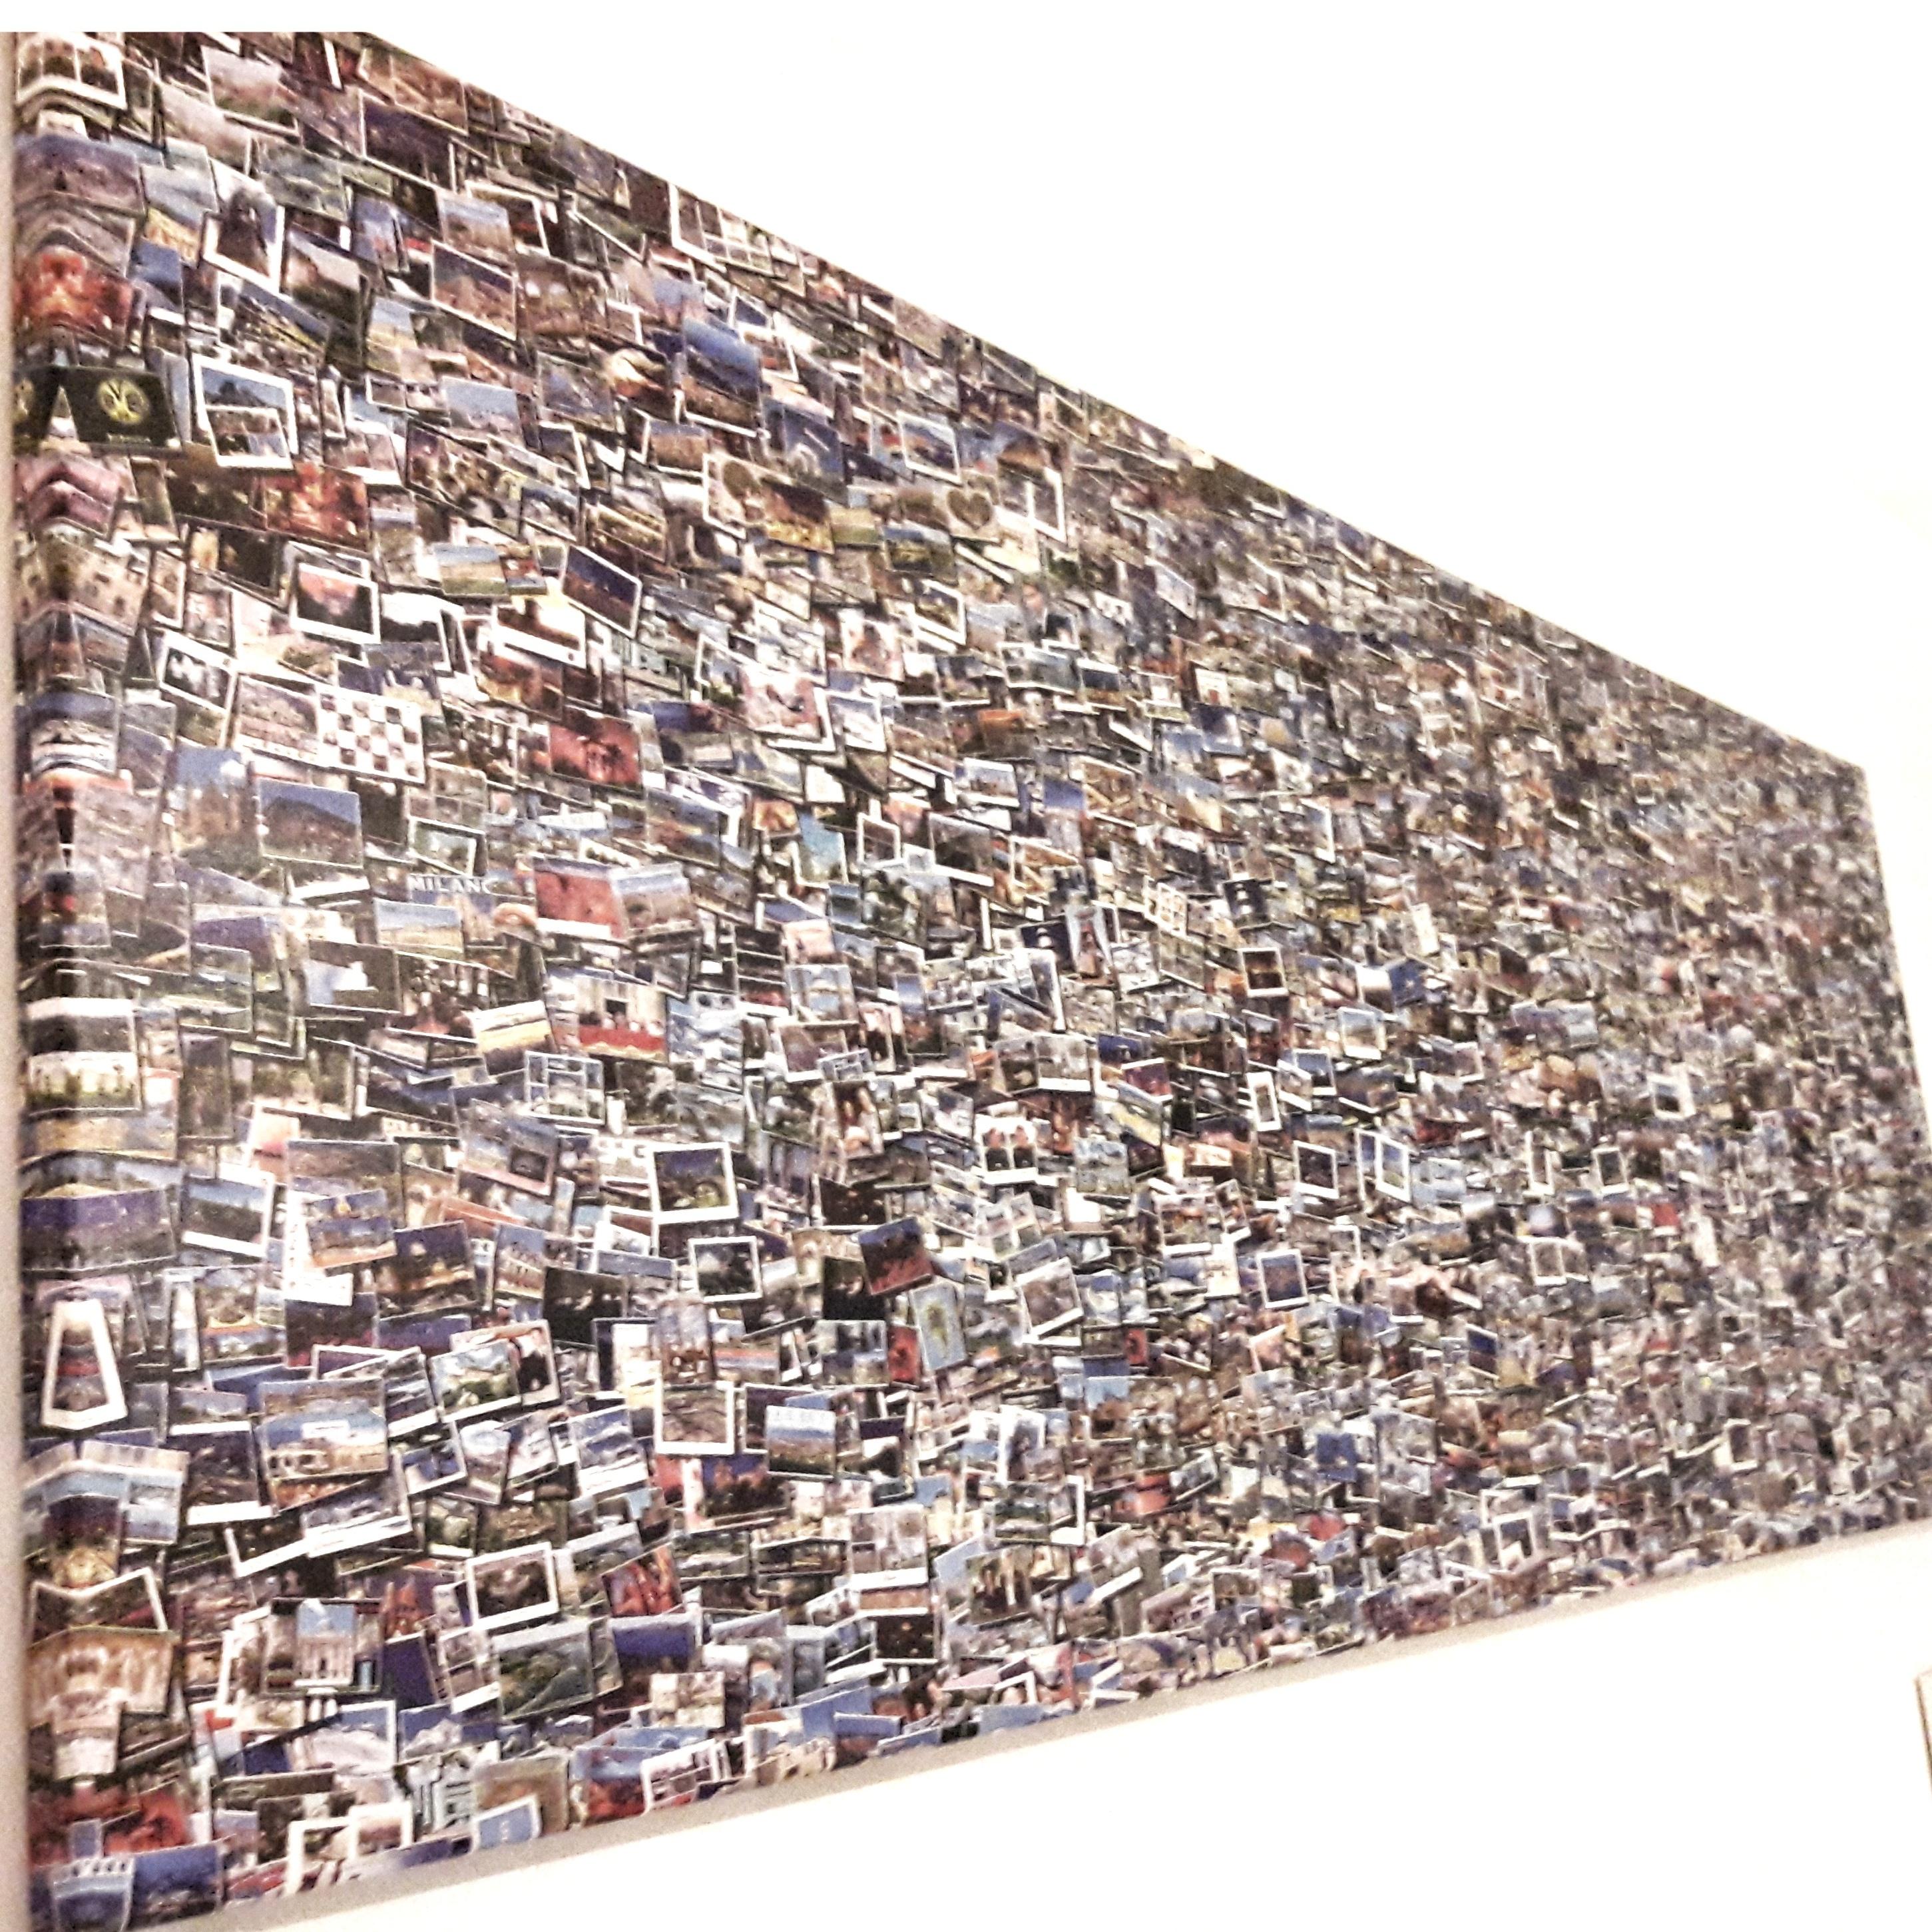 #postcards #leinwand #fernweh #500andstillgrowing